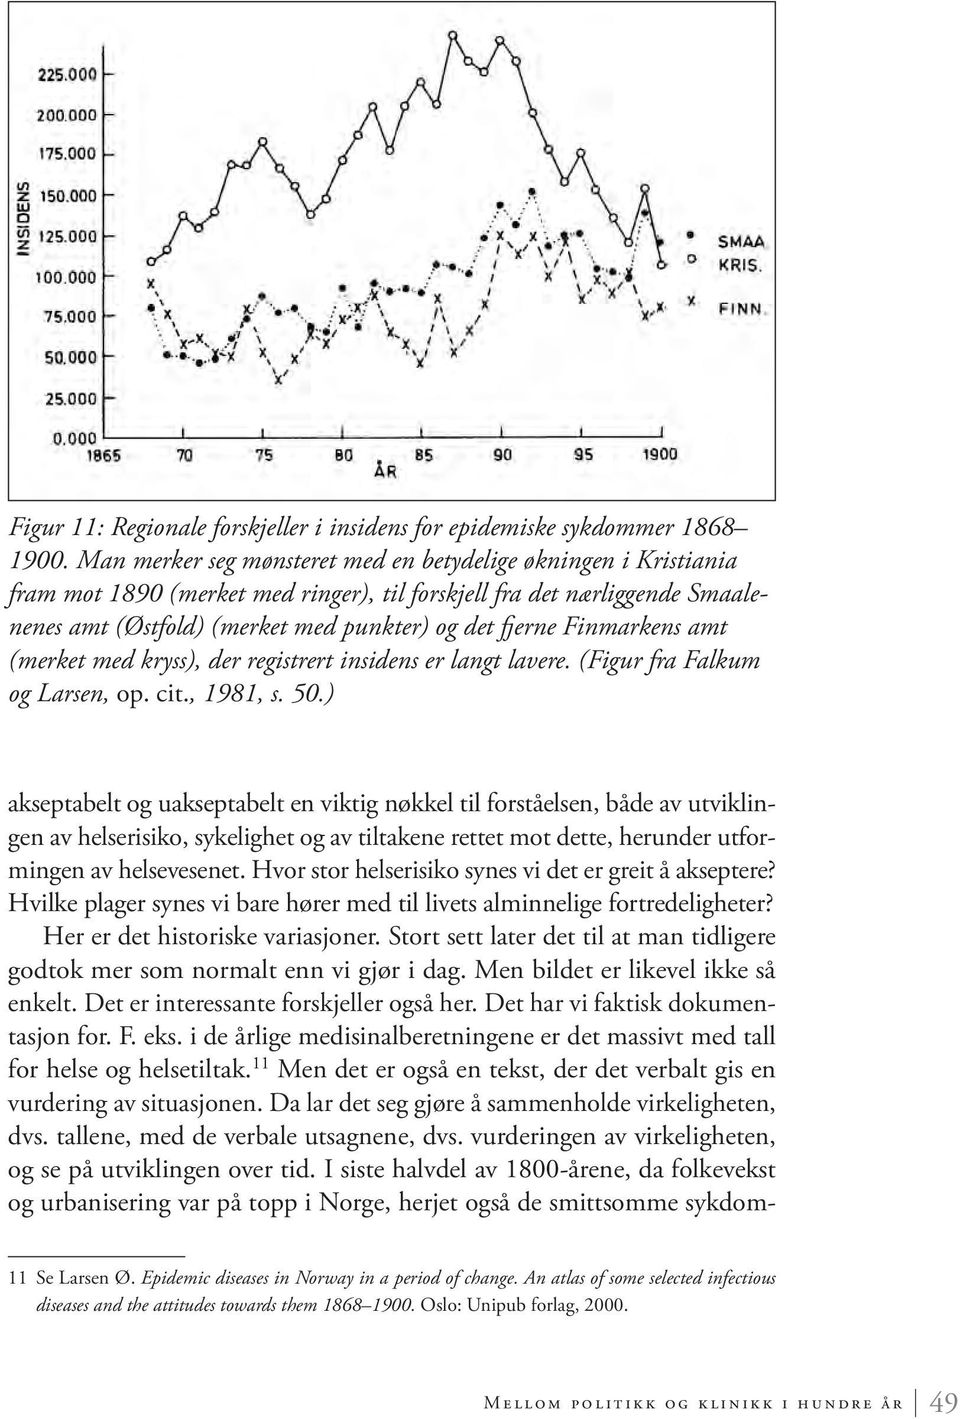 Finmarkens amt (merket med kryss), der registrert insidens er langt lavere. (Figur fra Falkum og Larsen, op. cit., 1981, s. 50.